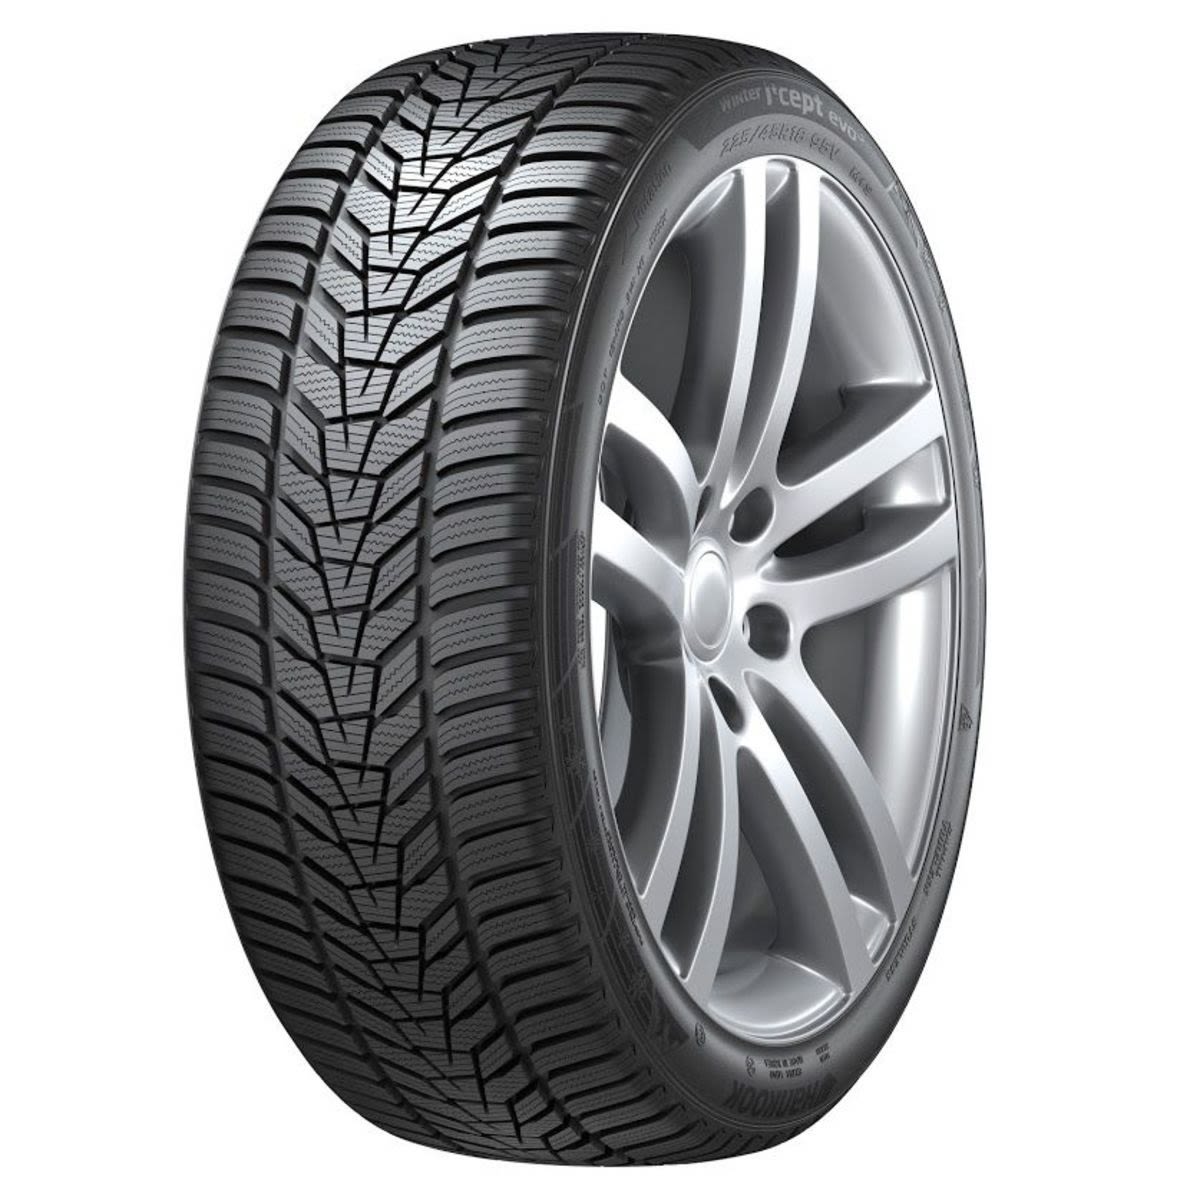 Neumáticos de invierno HANKOOK Winter i*cept evo3 W330 275/30R20 XL 97V